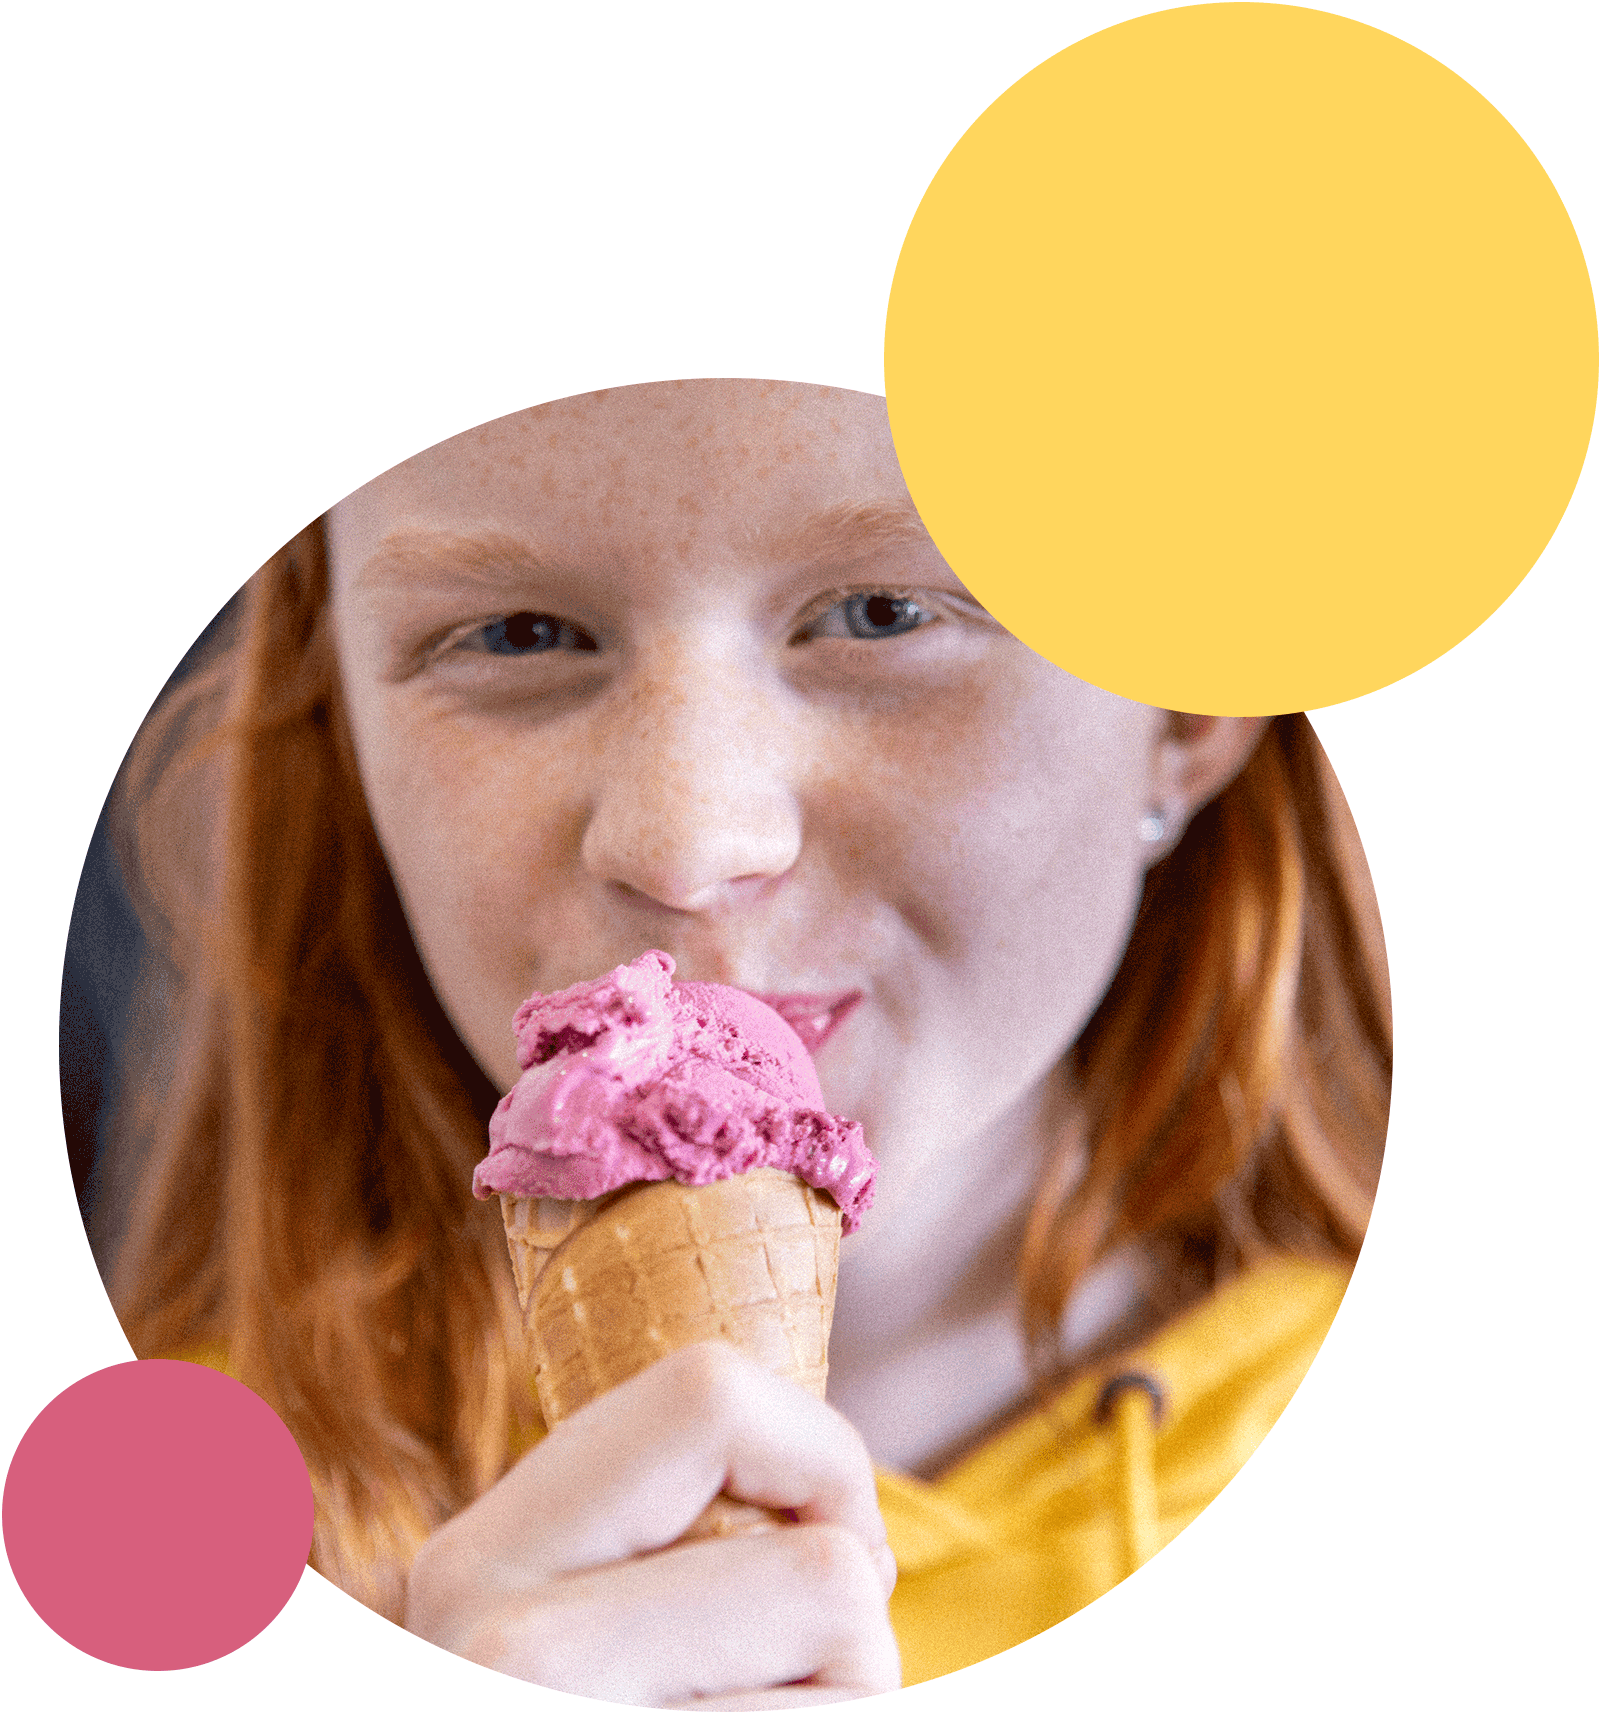 De Zordo Eiscafé Grünstadt Mädchen isst Eis in Waffel